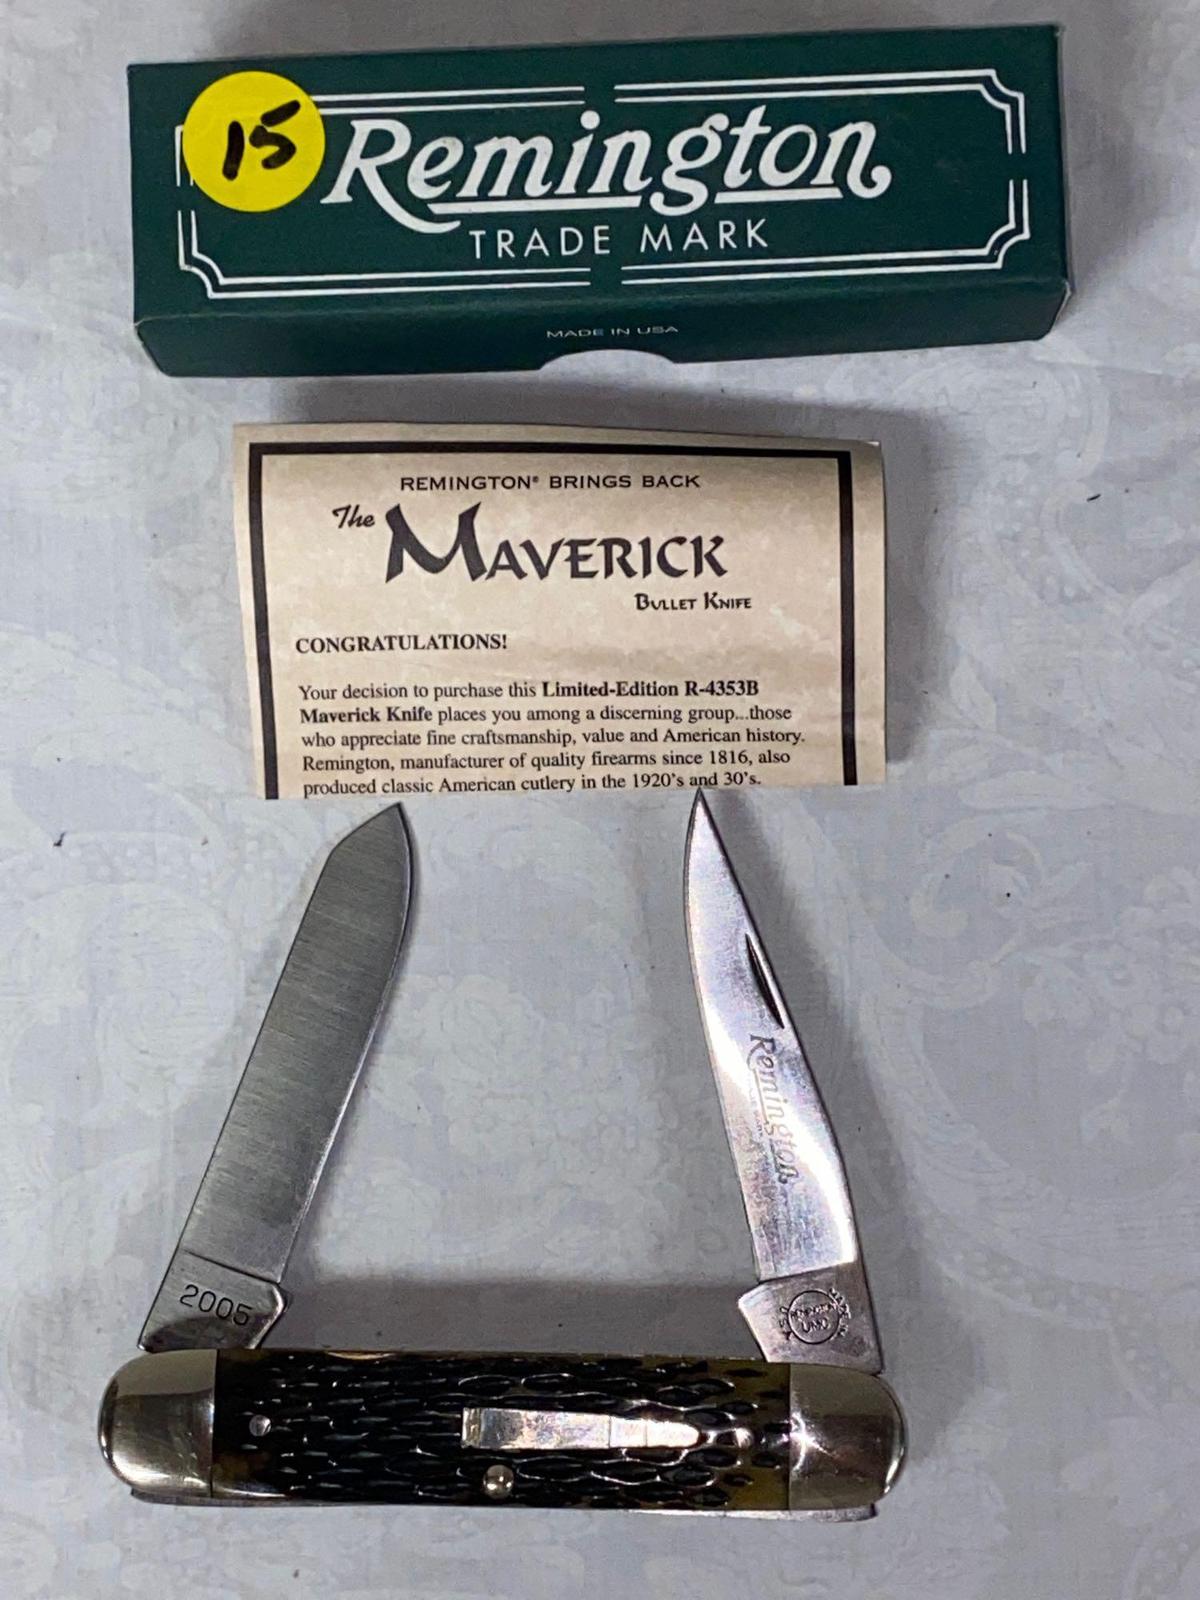 Remington 2005 limited edition Maverick knife #R-4353B.